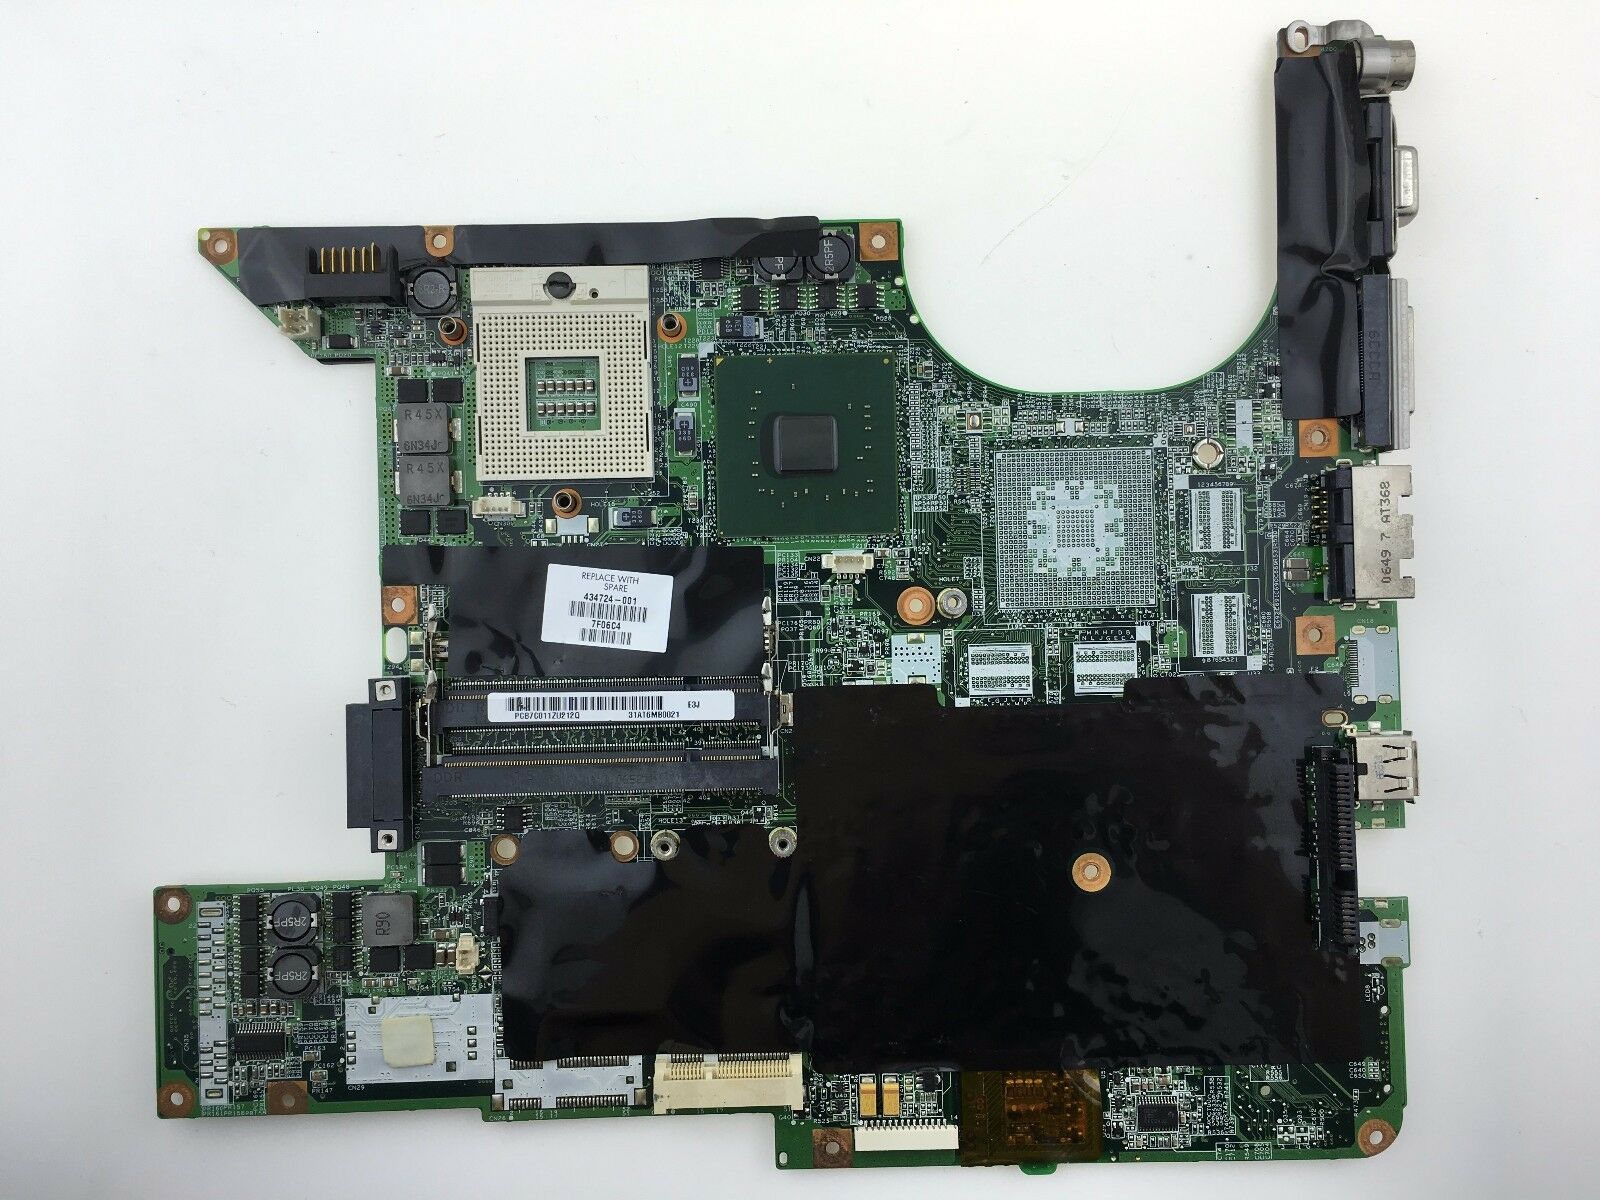 434724-001 Motherboard for HP DV6000 DV6700 series Laptop, Intel 945GM "A" Memory Type: See Description Com